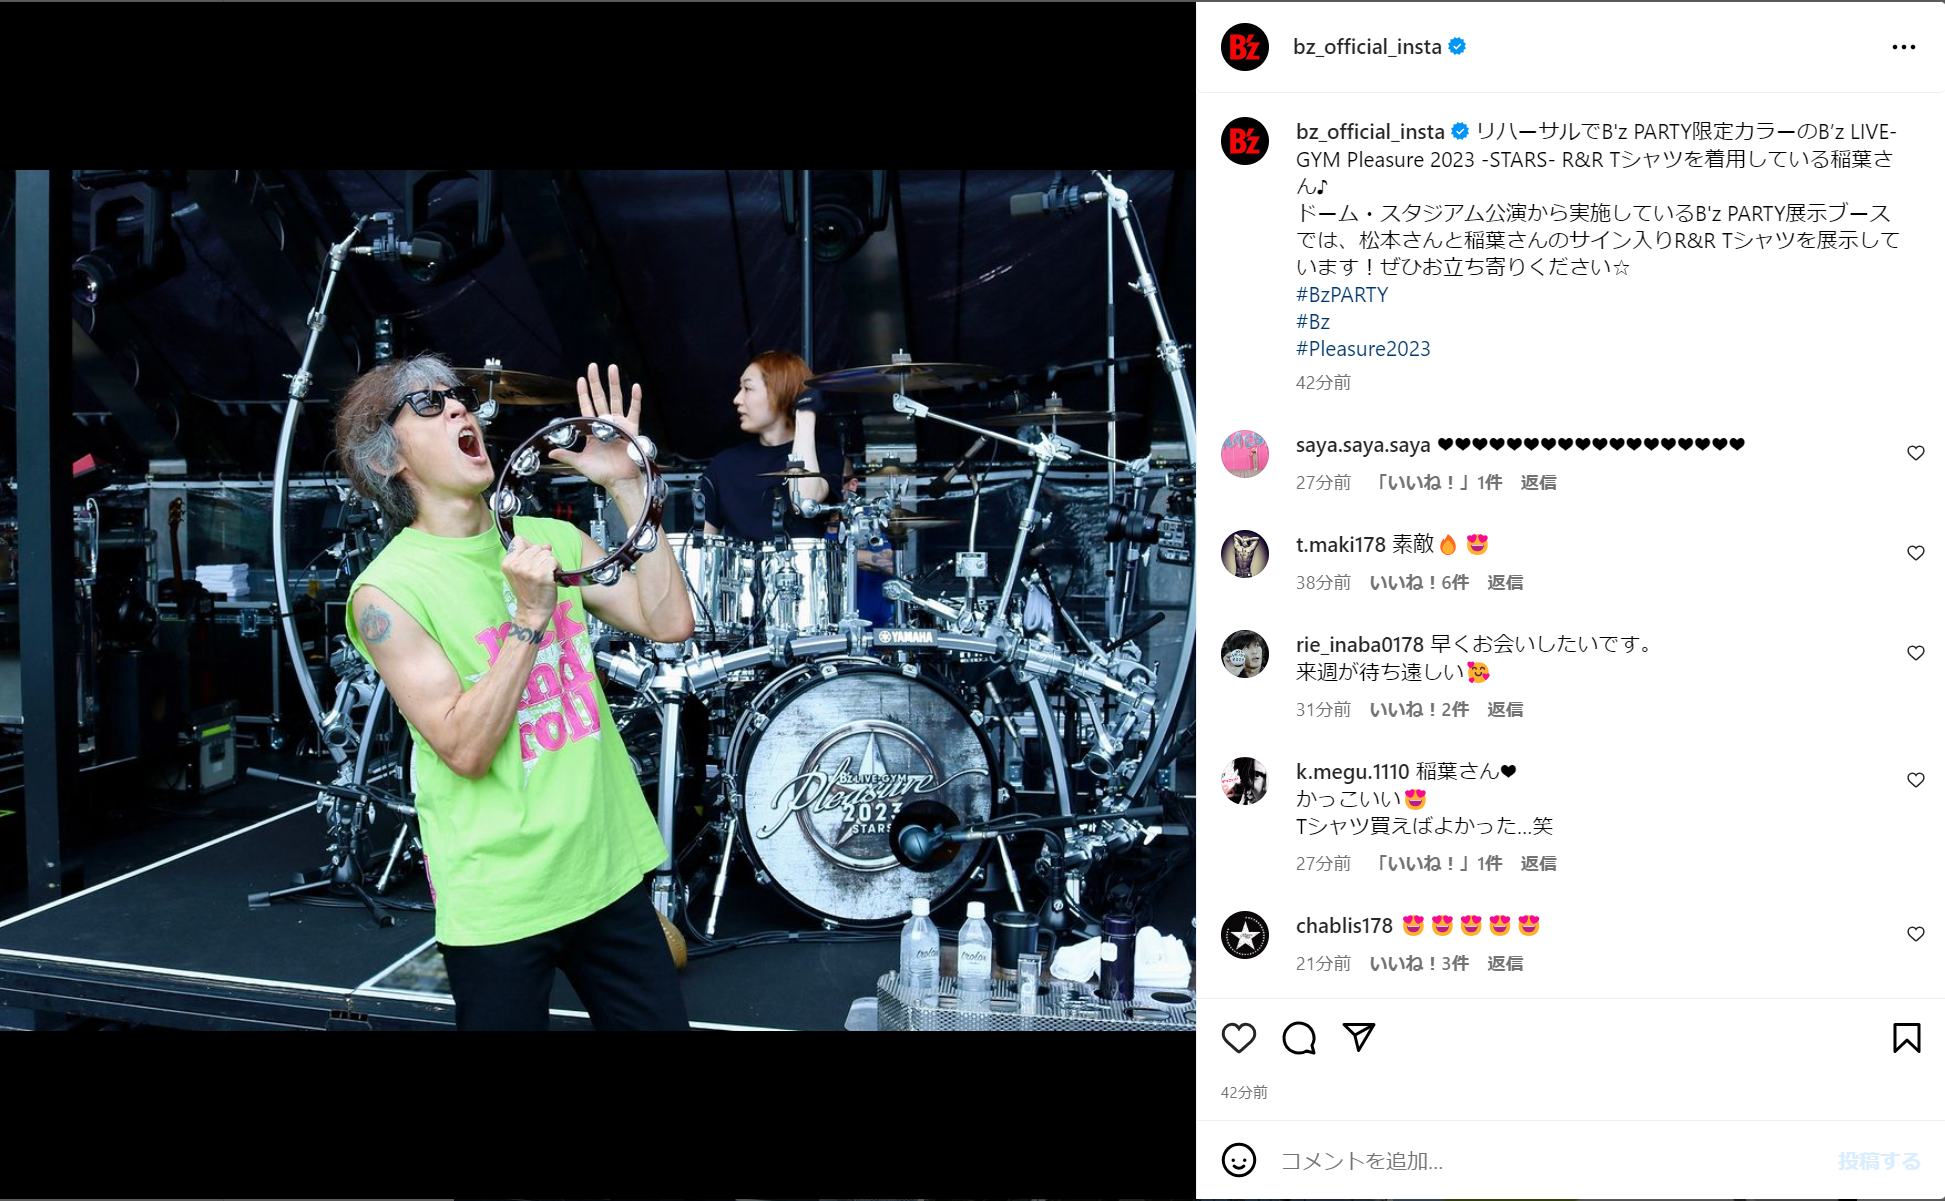 『B'z LIVE-GYM Pleasure 2023 -STARS-』リハーサルでB'z PARTY仕様の『R&R Tシャツ』を着用する稲葉浩志の写真